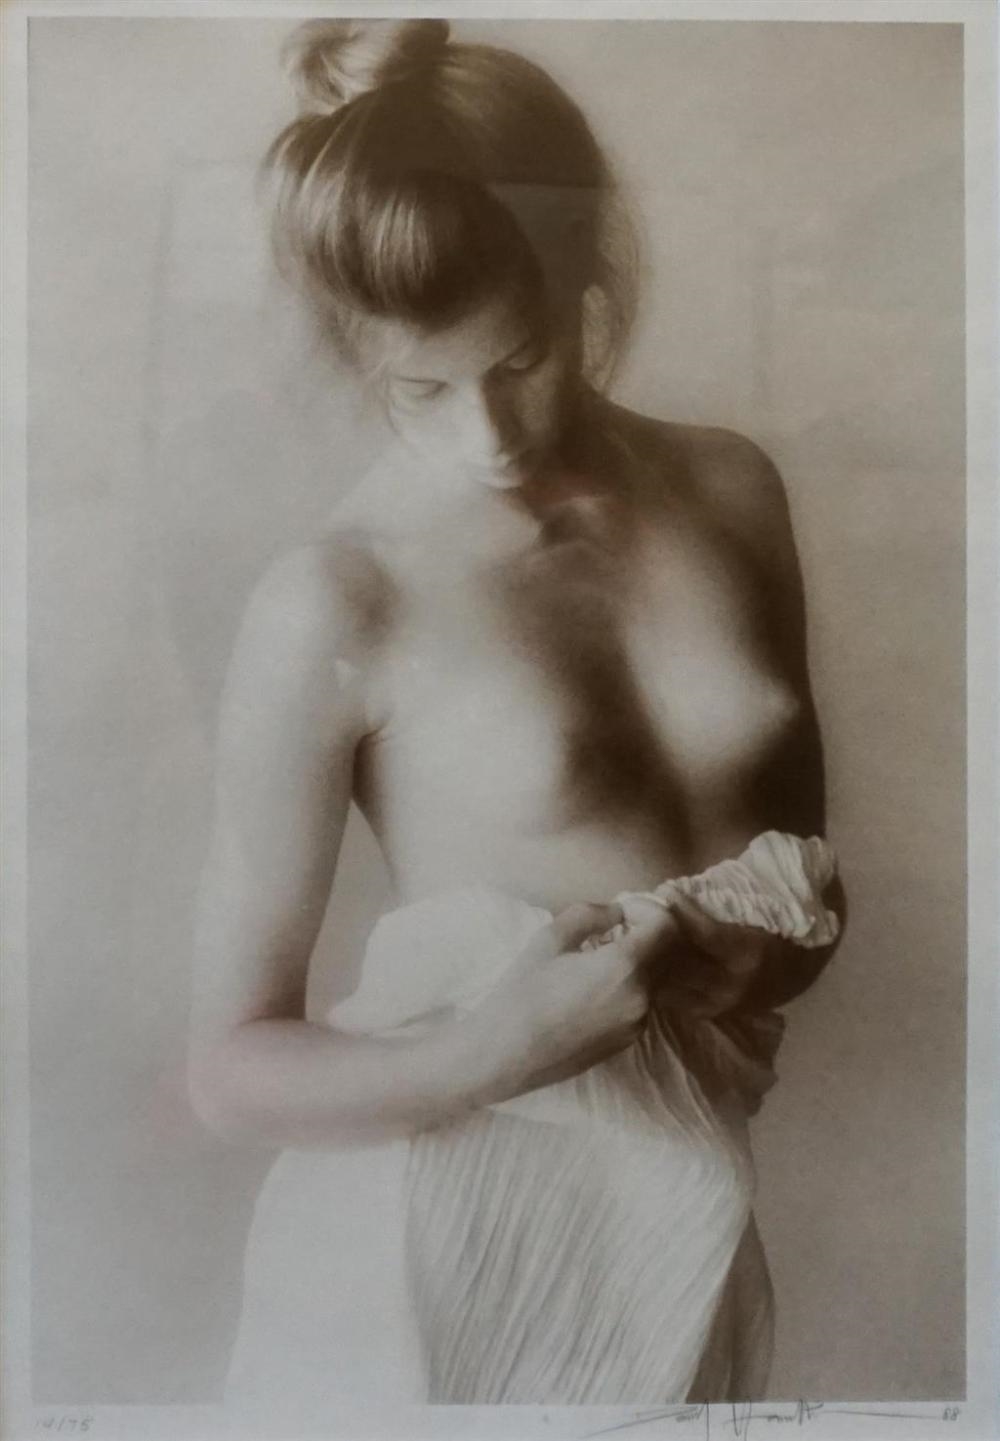 Artwork by David Hamilton, 'Nude #4', Made of Photograph.